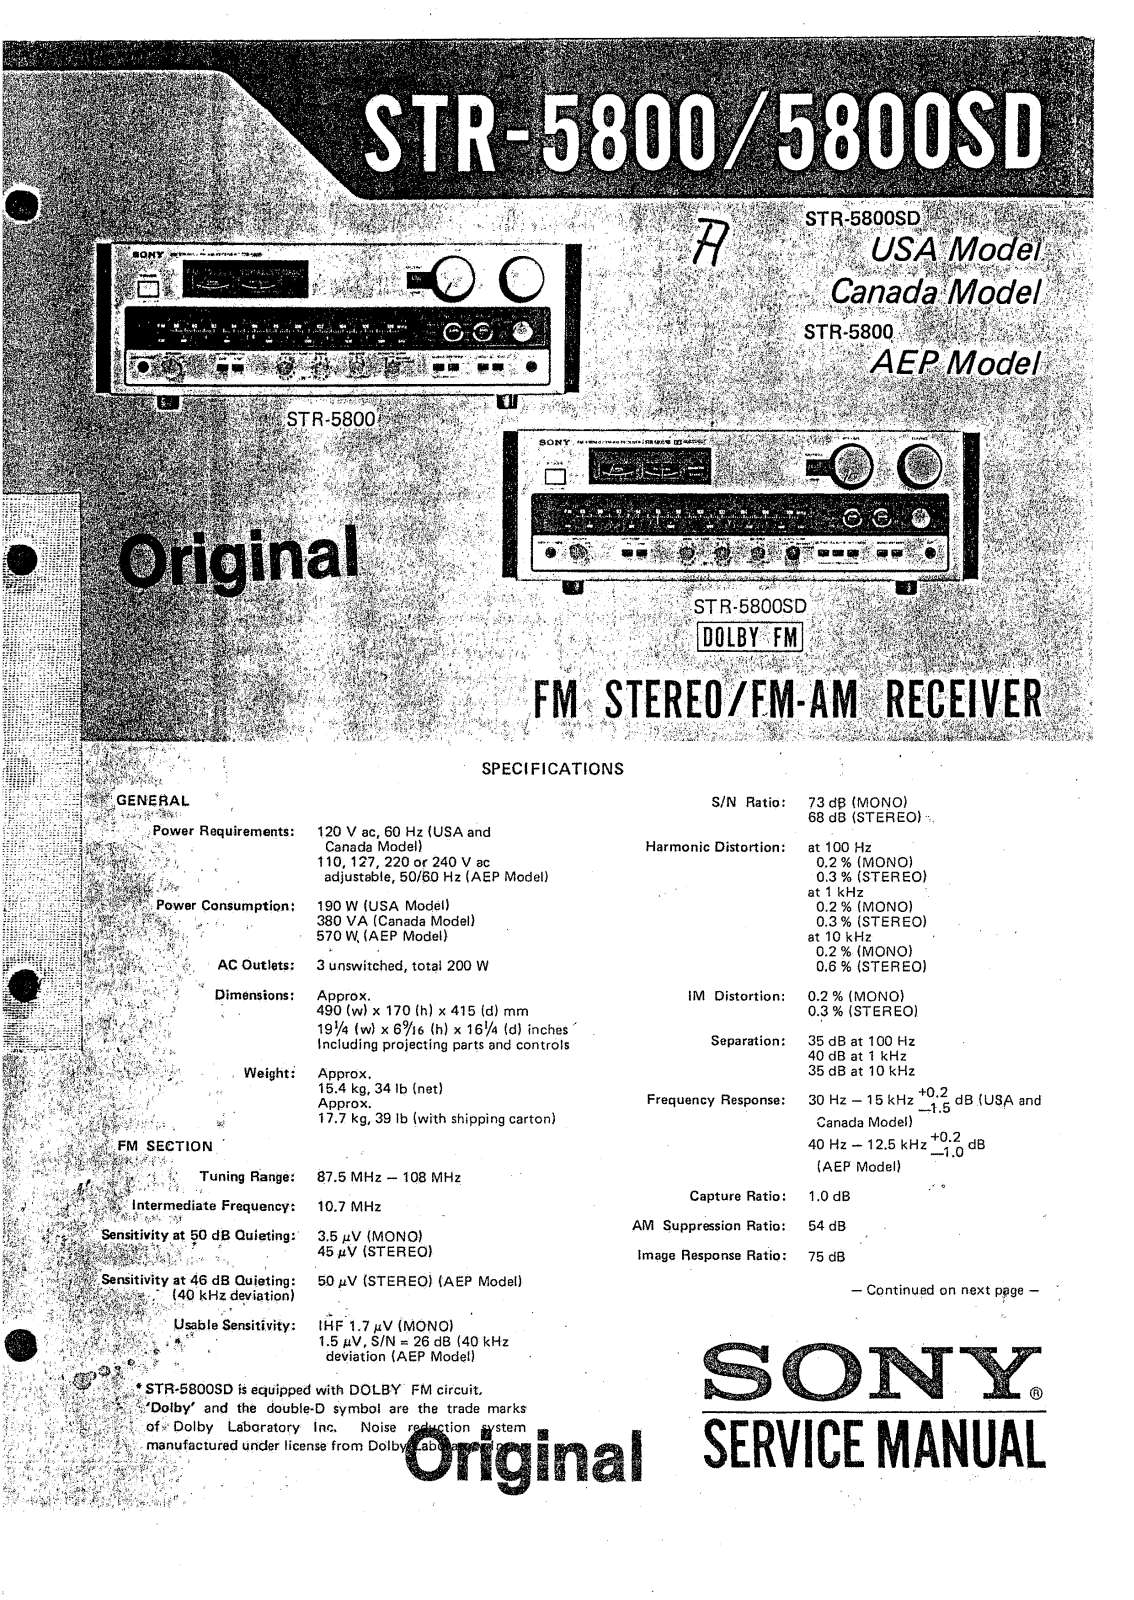 Sony STR-5800 Service Manual